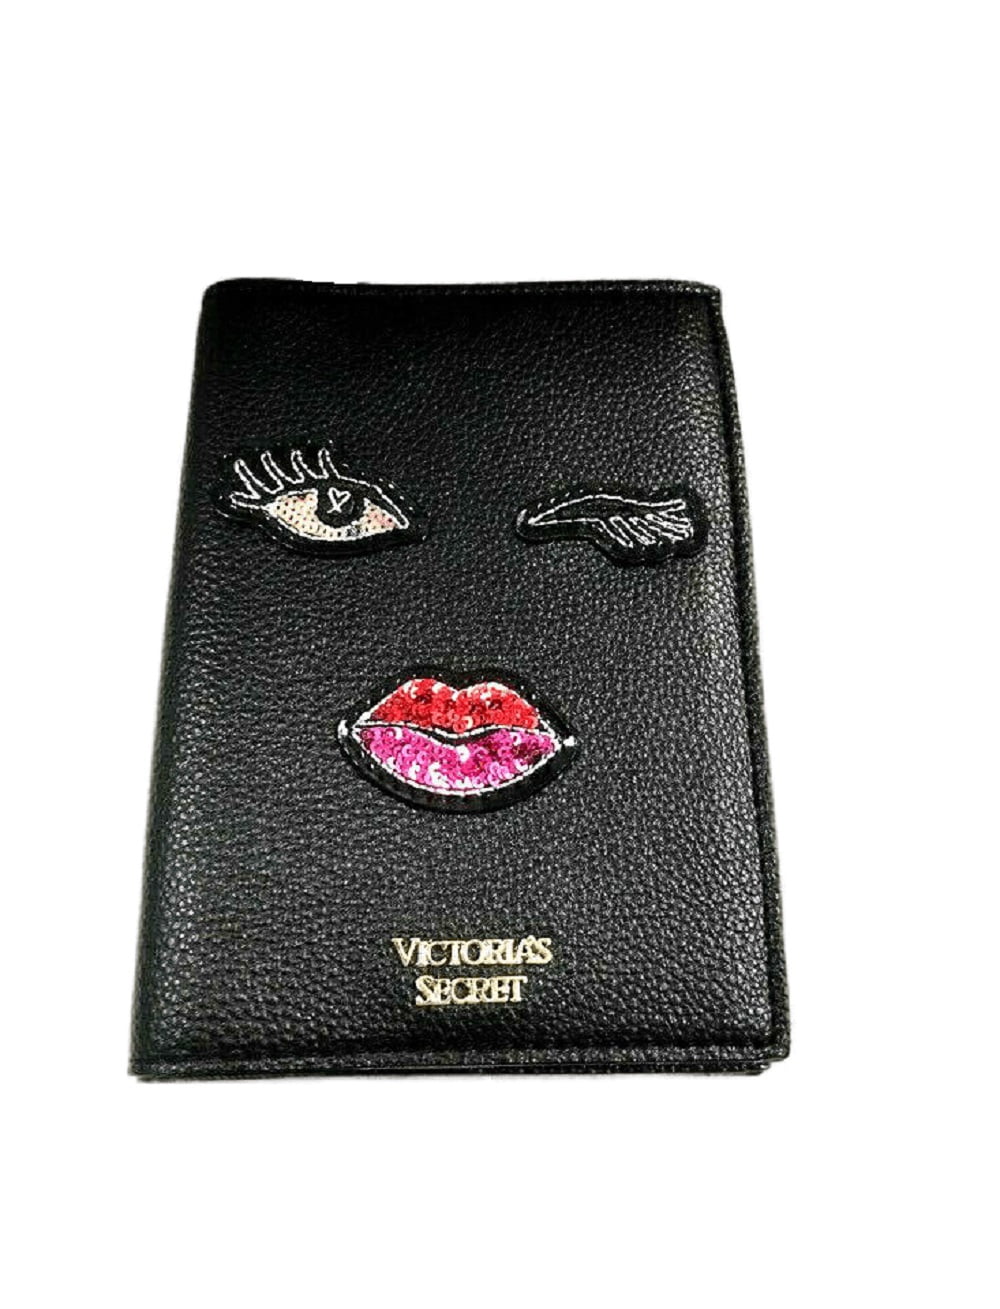 Victoria' Secret Black Sequin Lip & Eye Passport Holder Wallet Card and ID  Cases NEW